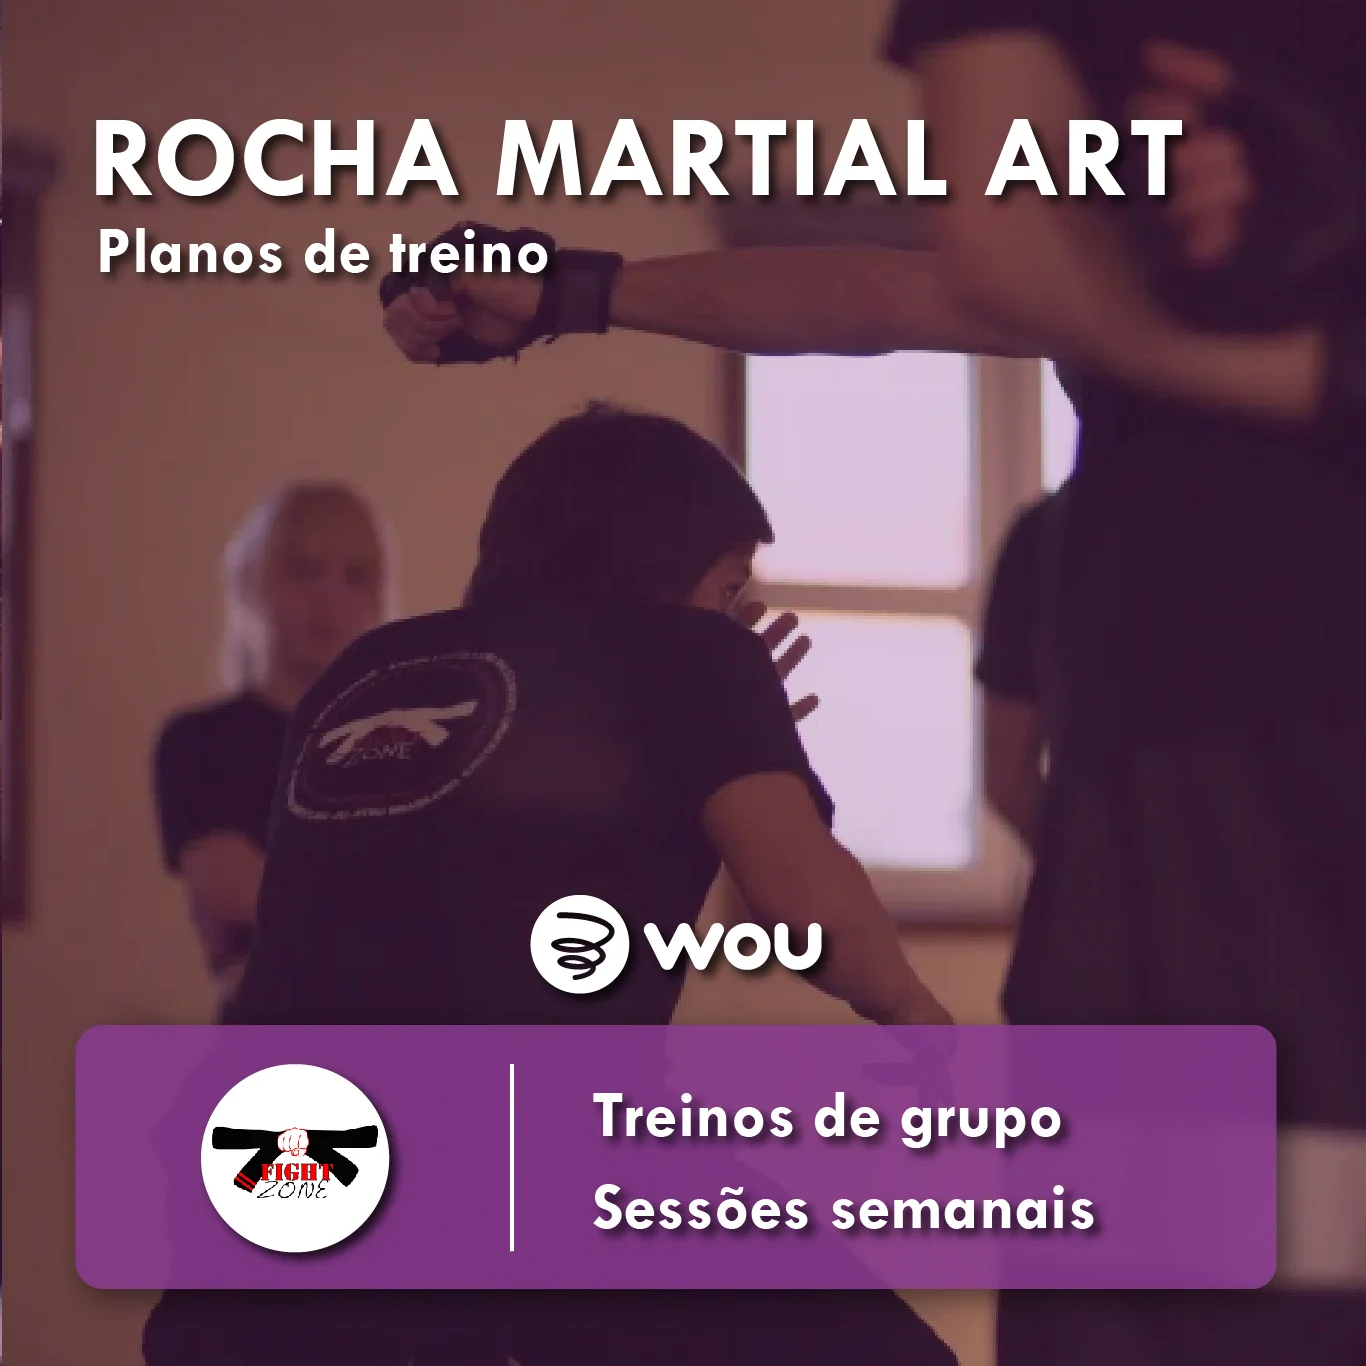 Rocha Martial Art classes in Aveiro